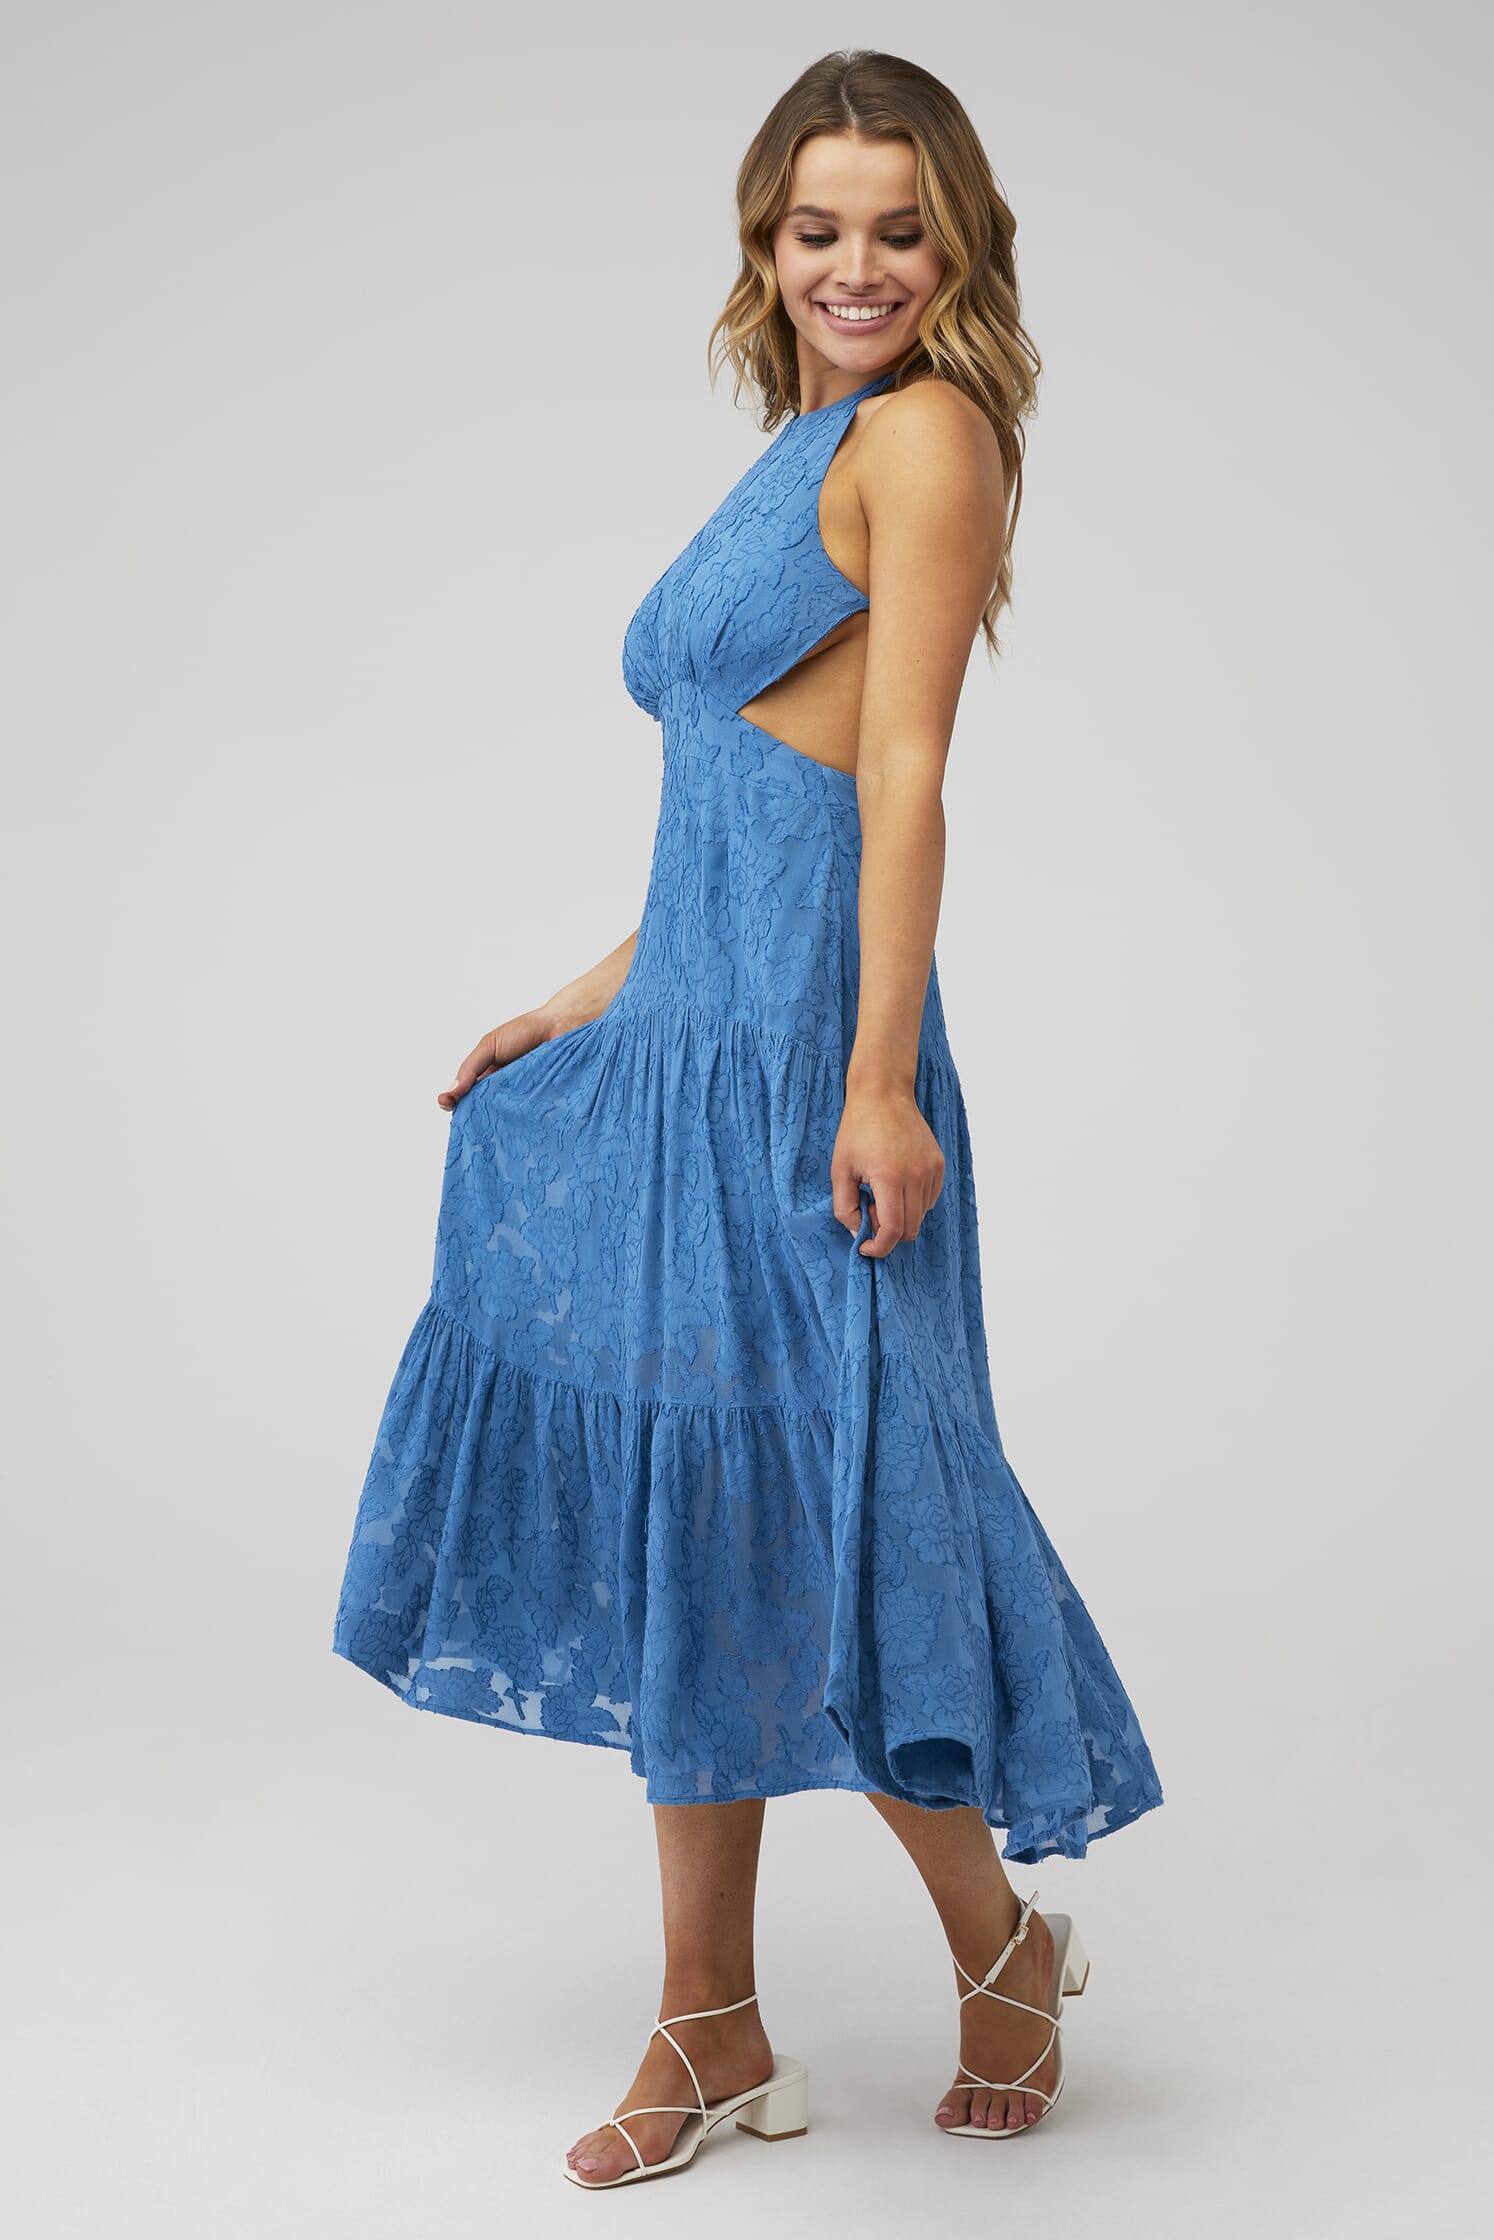 Karina Grimaldi | Lily Jacquard Dress in Blue| FashionPass